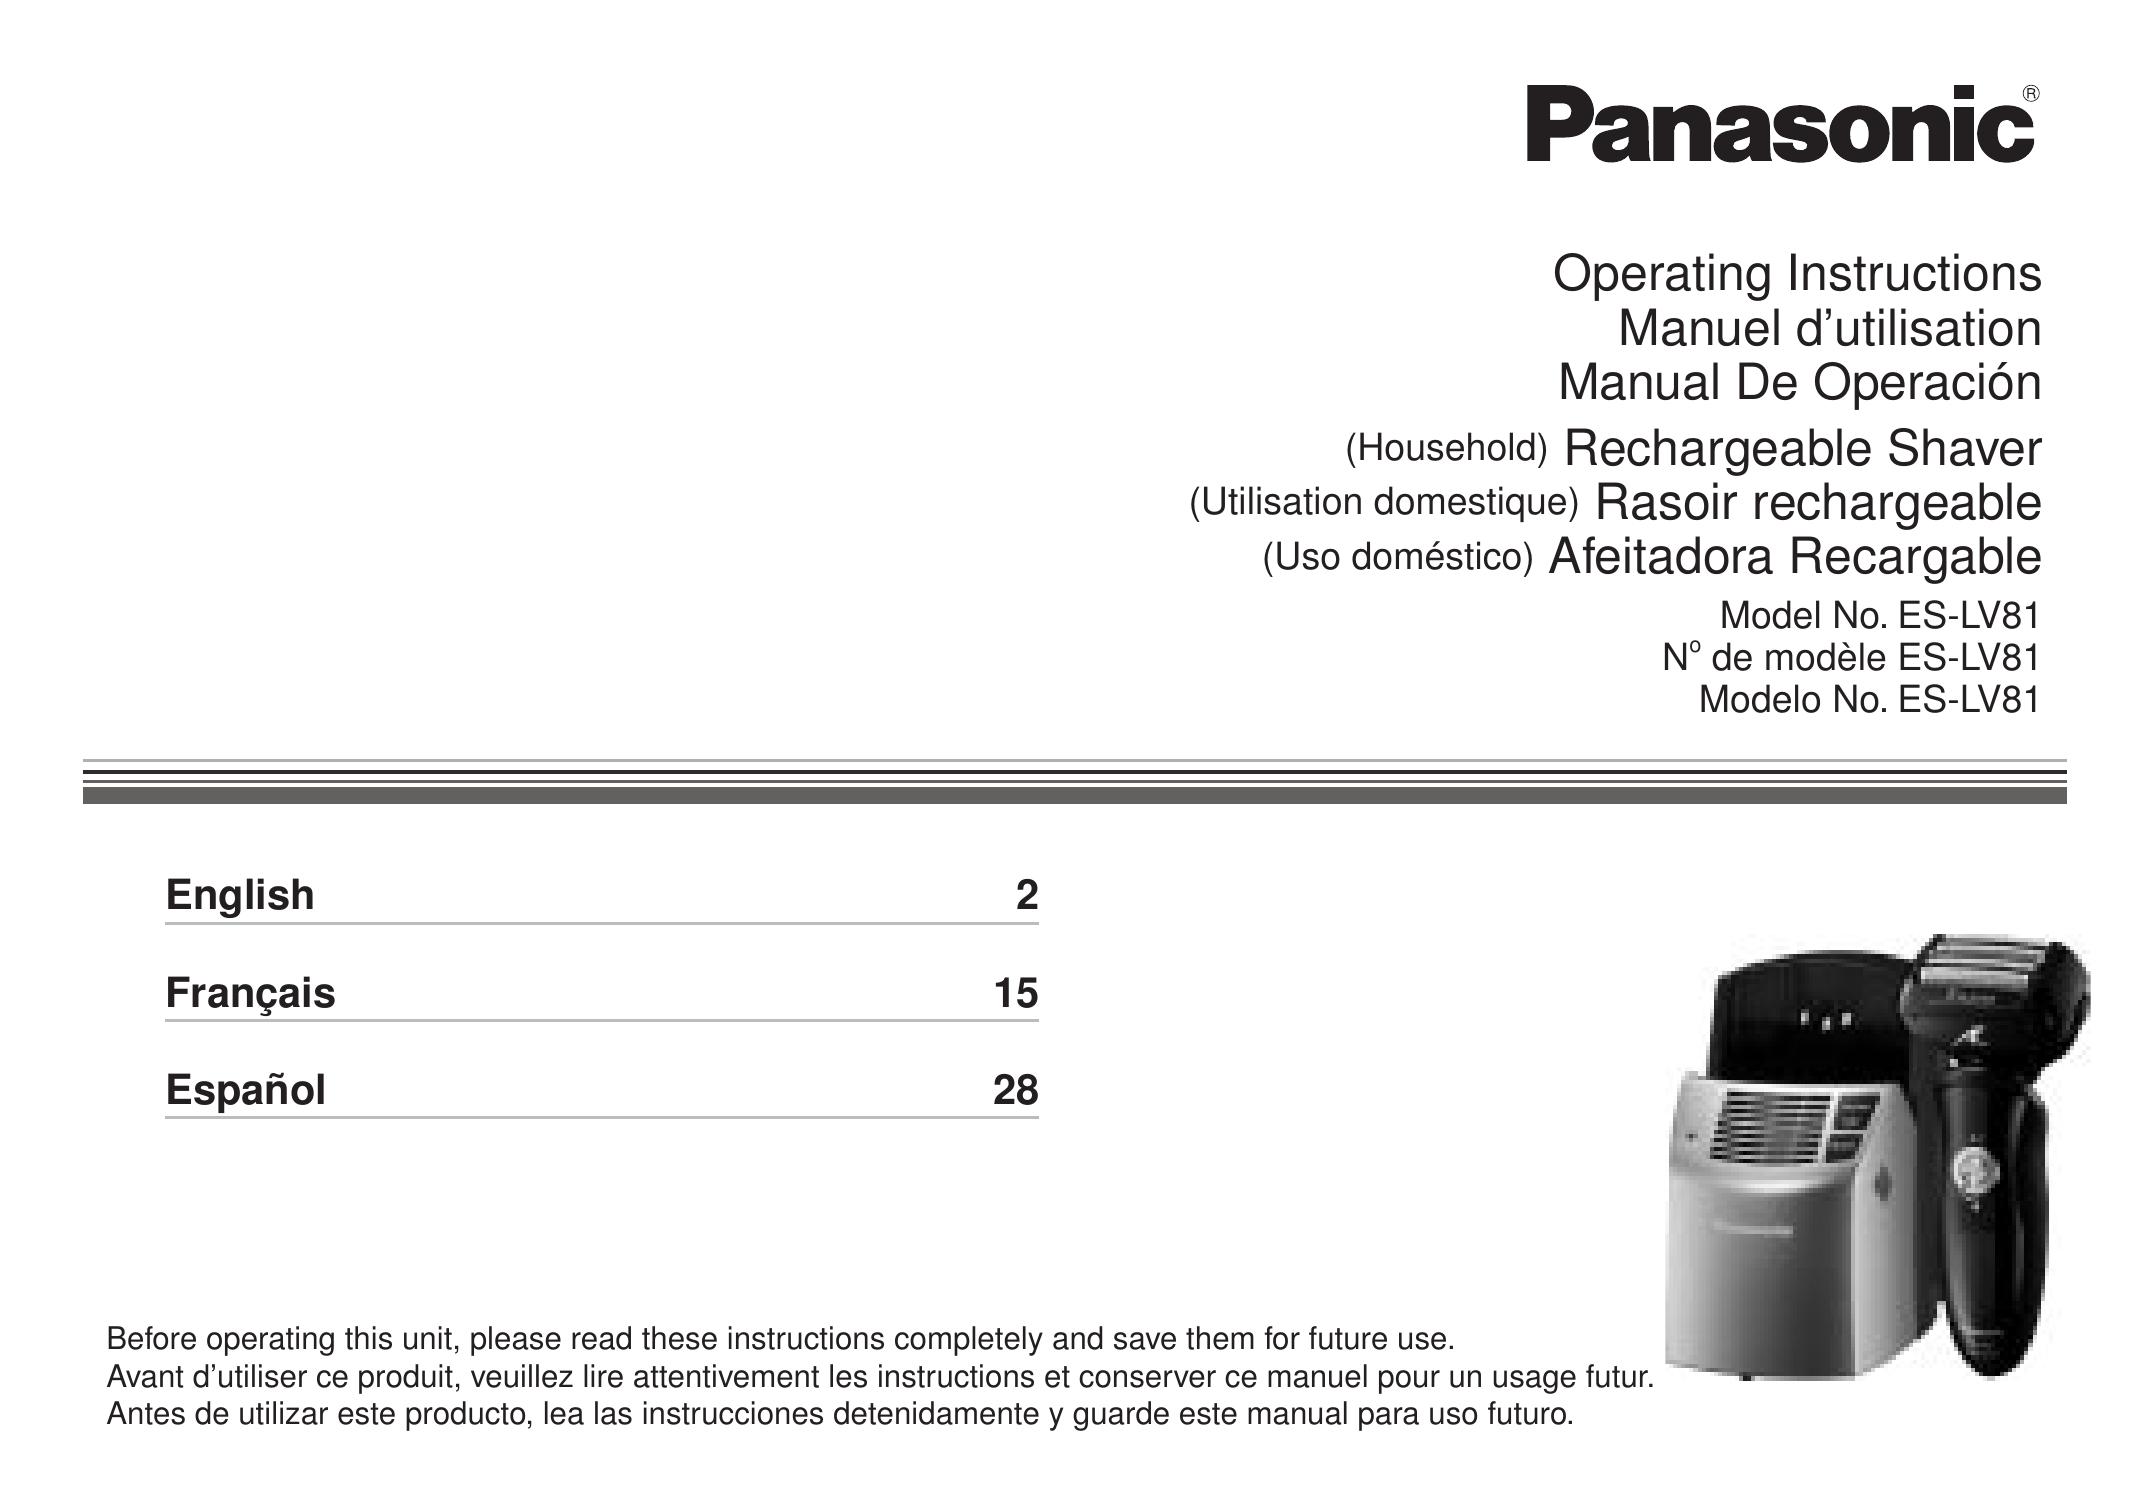 Panasonic ES-LV81 Electric Shaver User Manual